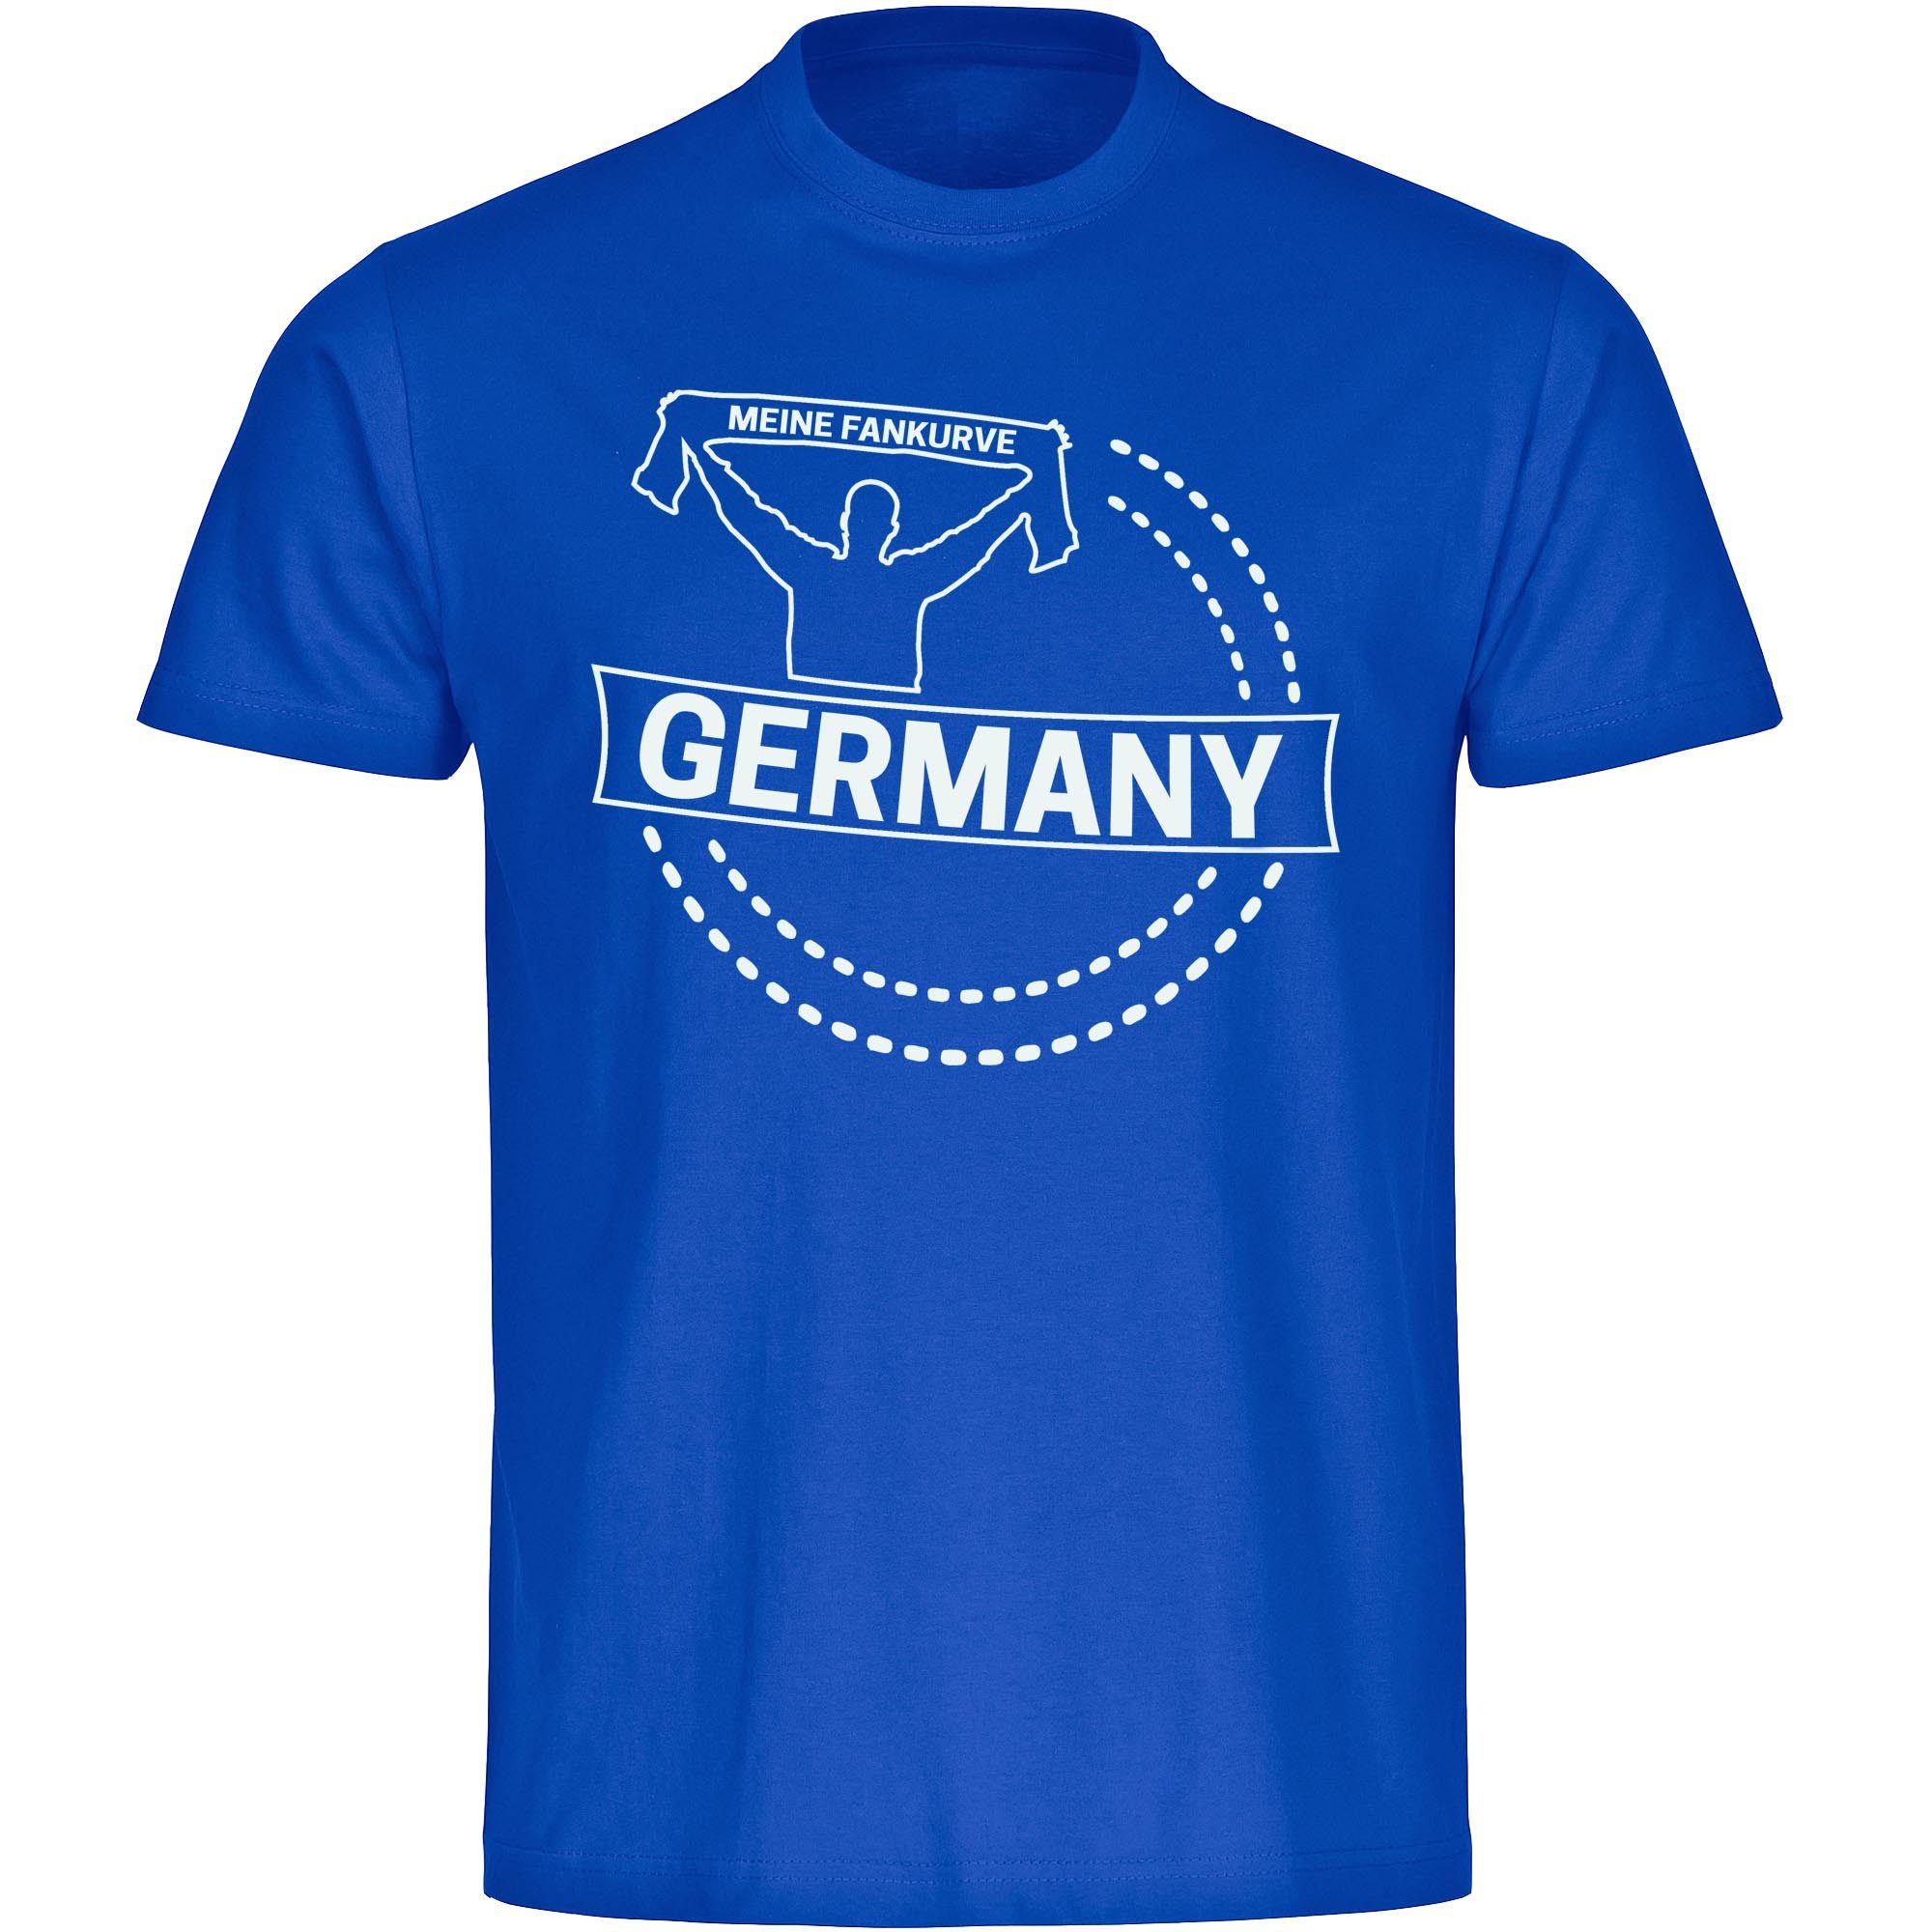 multifanshop T-Shirt Herren Germany - Meine Fankurve - Männer